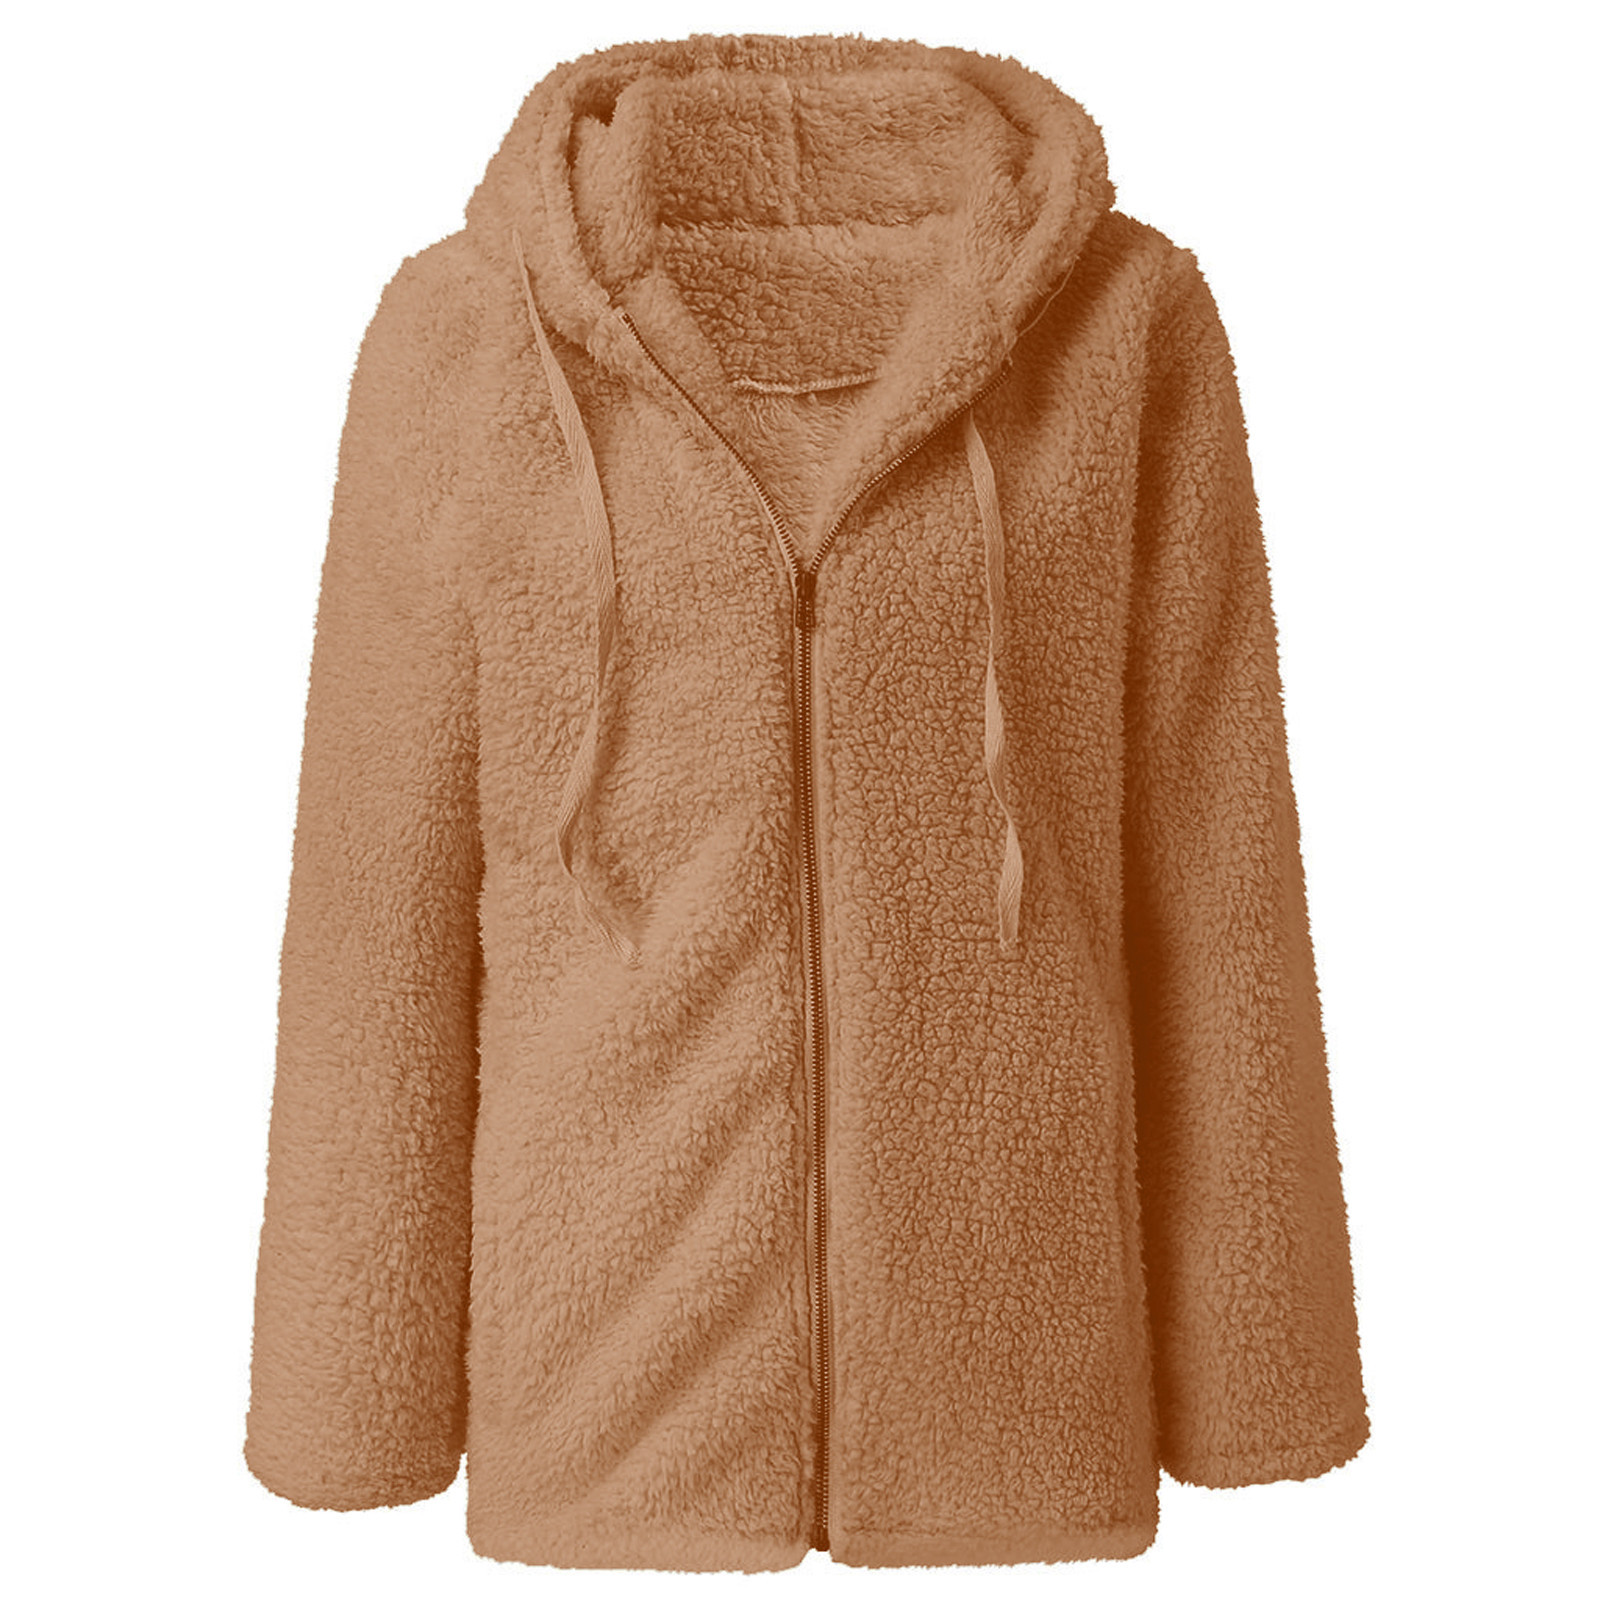 Womens Fuzzy Winter Coat Fleece Hooded Sherpa Jacket Plus Size Zipper Outerwear Long Sleeve Warm Outfit with Pocket Winter Coat Abrigos de Mujer Elegantes Largos - image 3 of 6